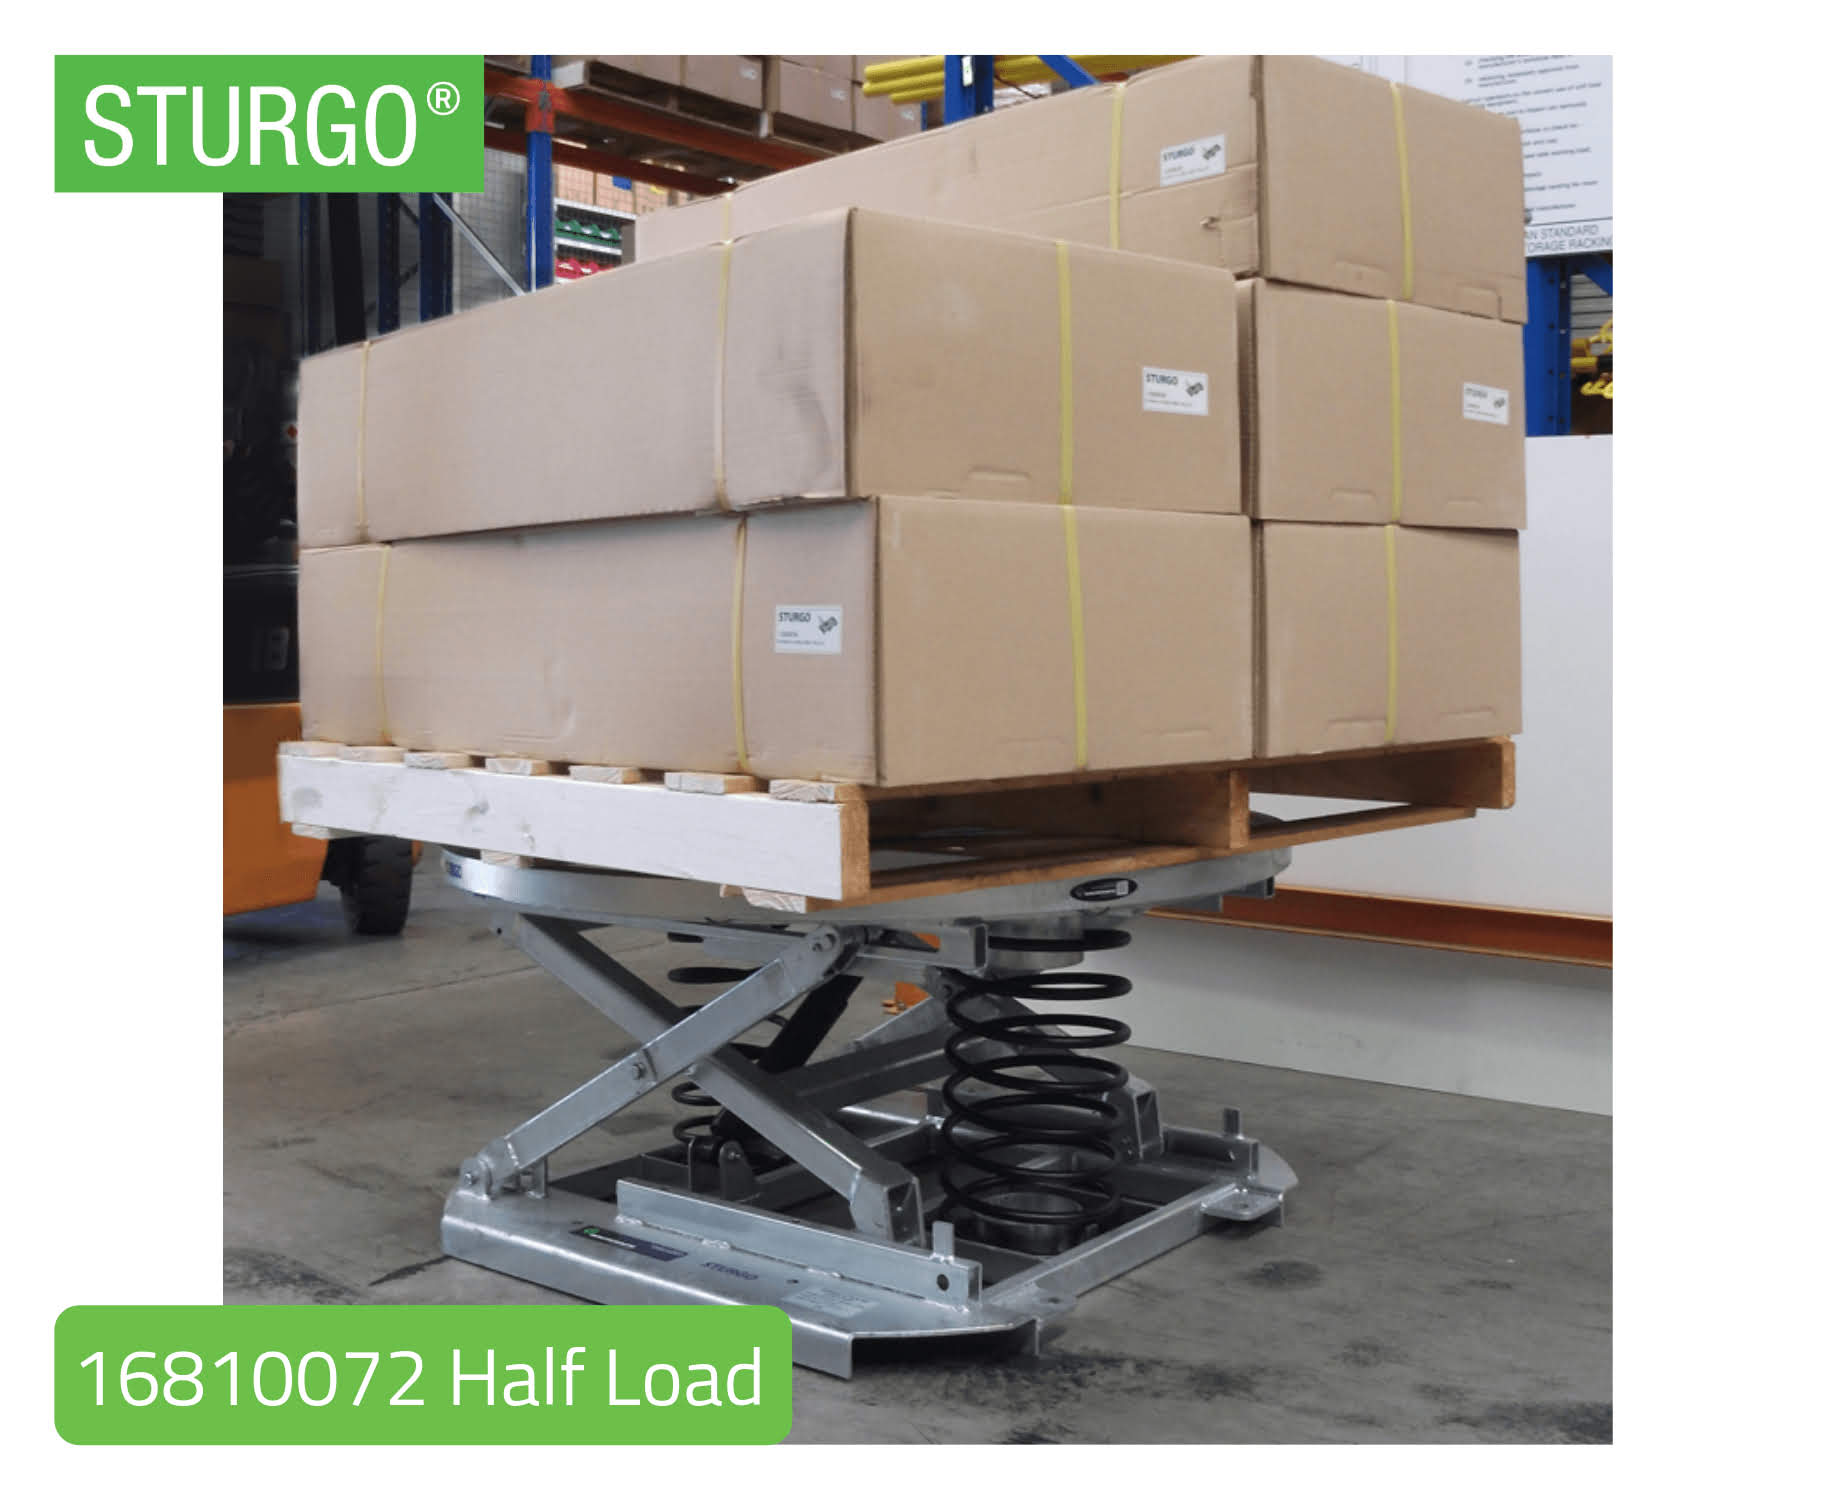 STURGO® Spring Loaded Pallet Positioner